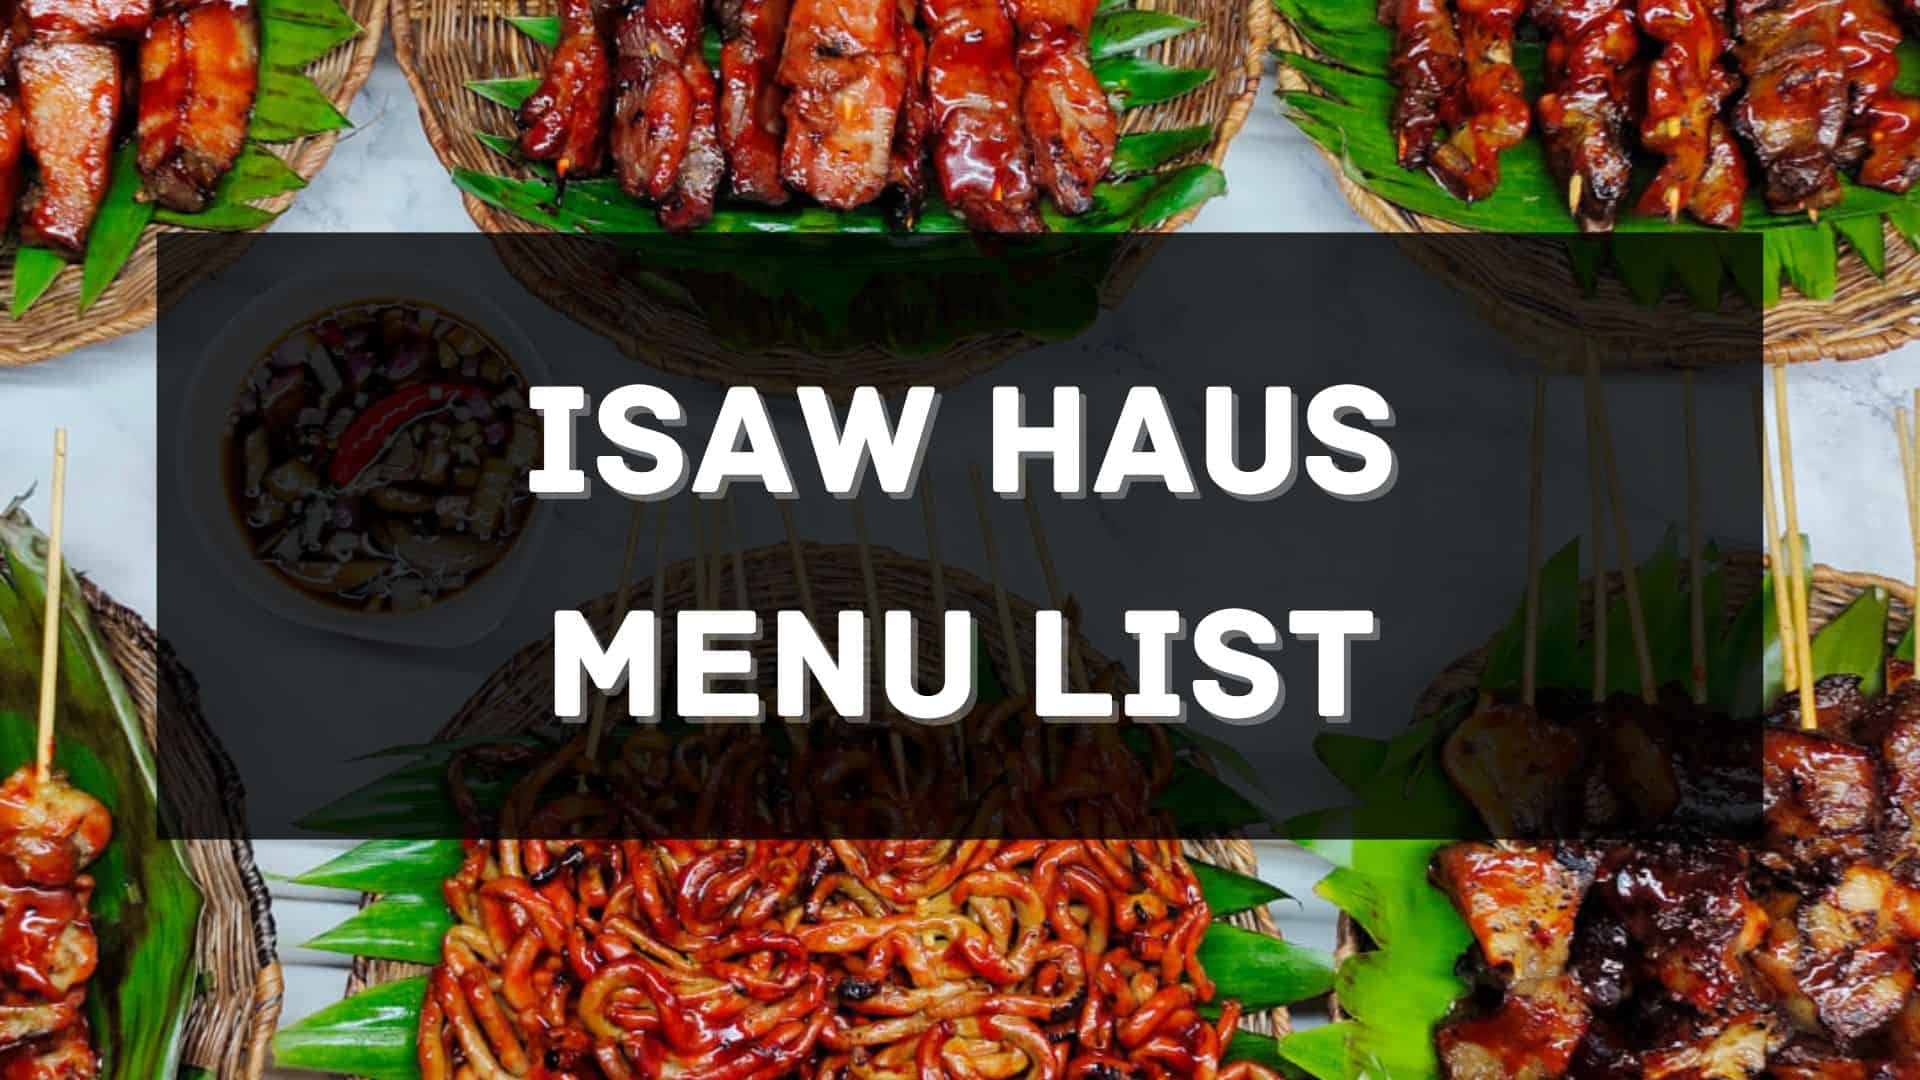 isaw haus menu prices phulippines